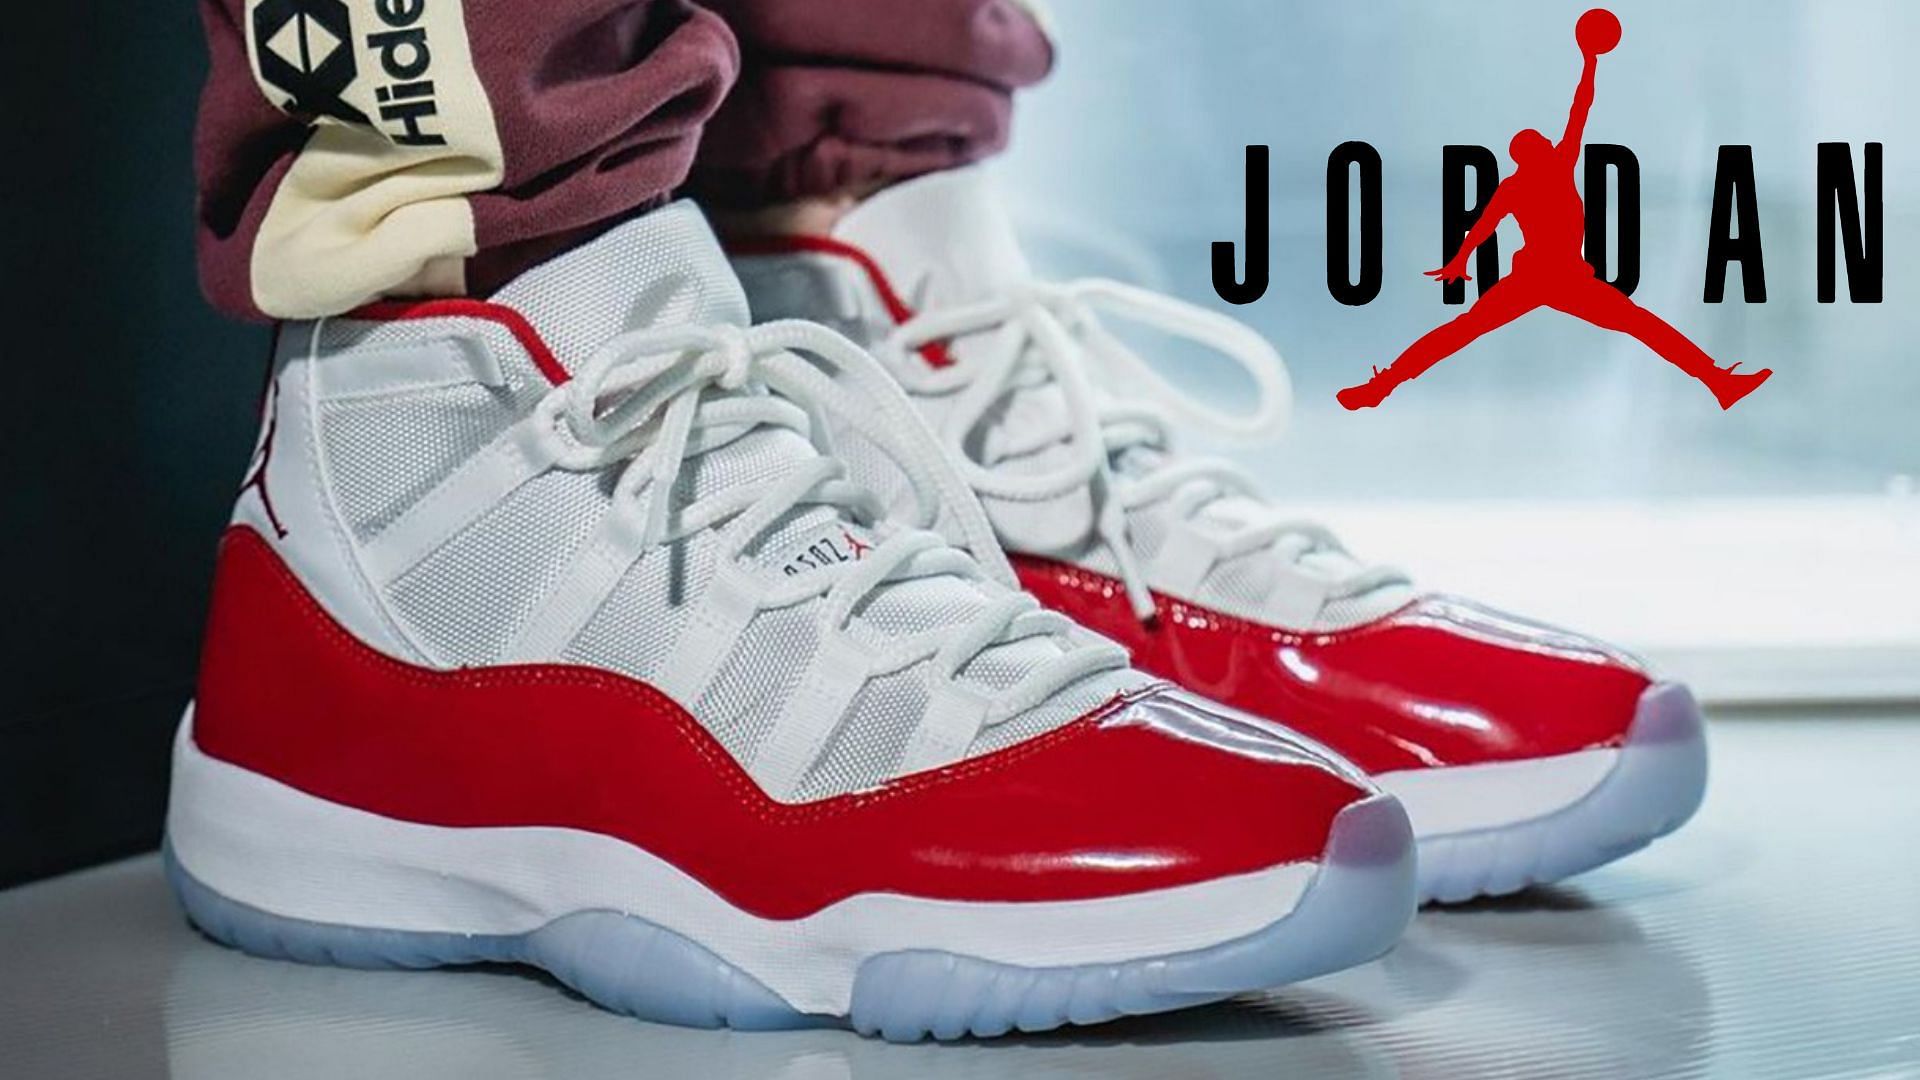 Air Jordan 11 Cherry shoes arriving this Christmas (Image via Instagram/@knowingkicks)